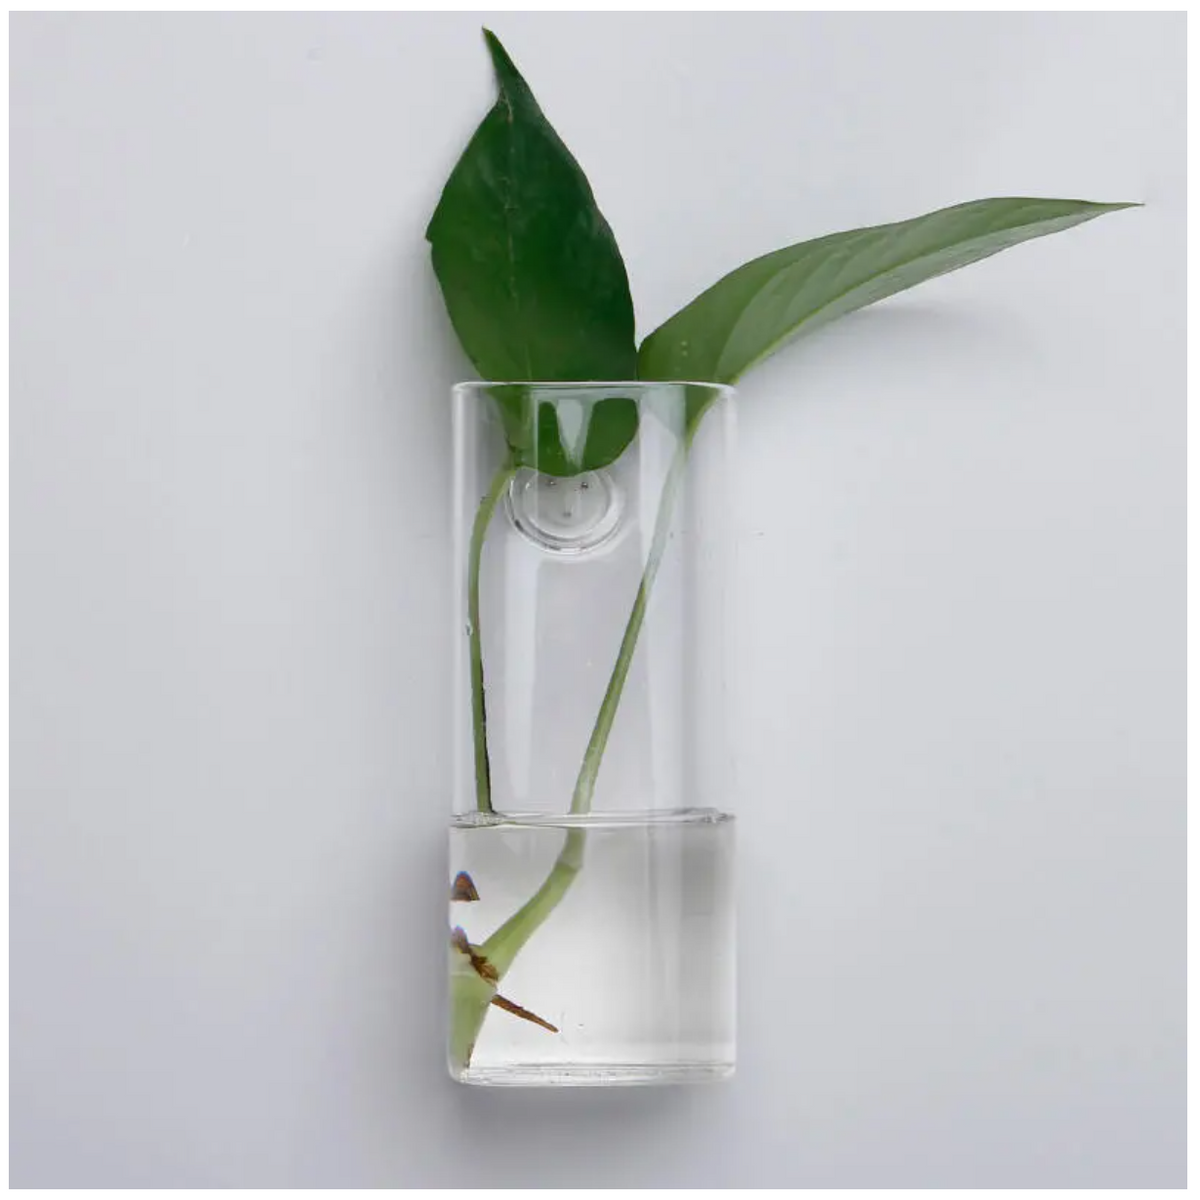 Wall-mounted Tube Shaped Glass Vase